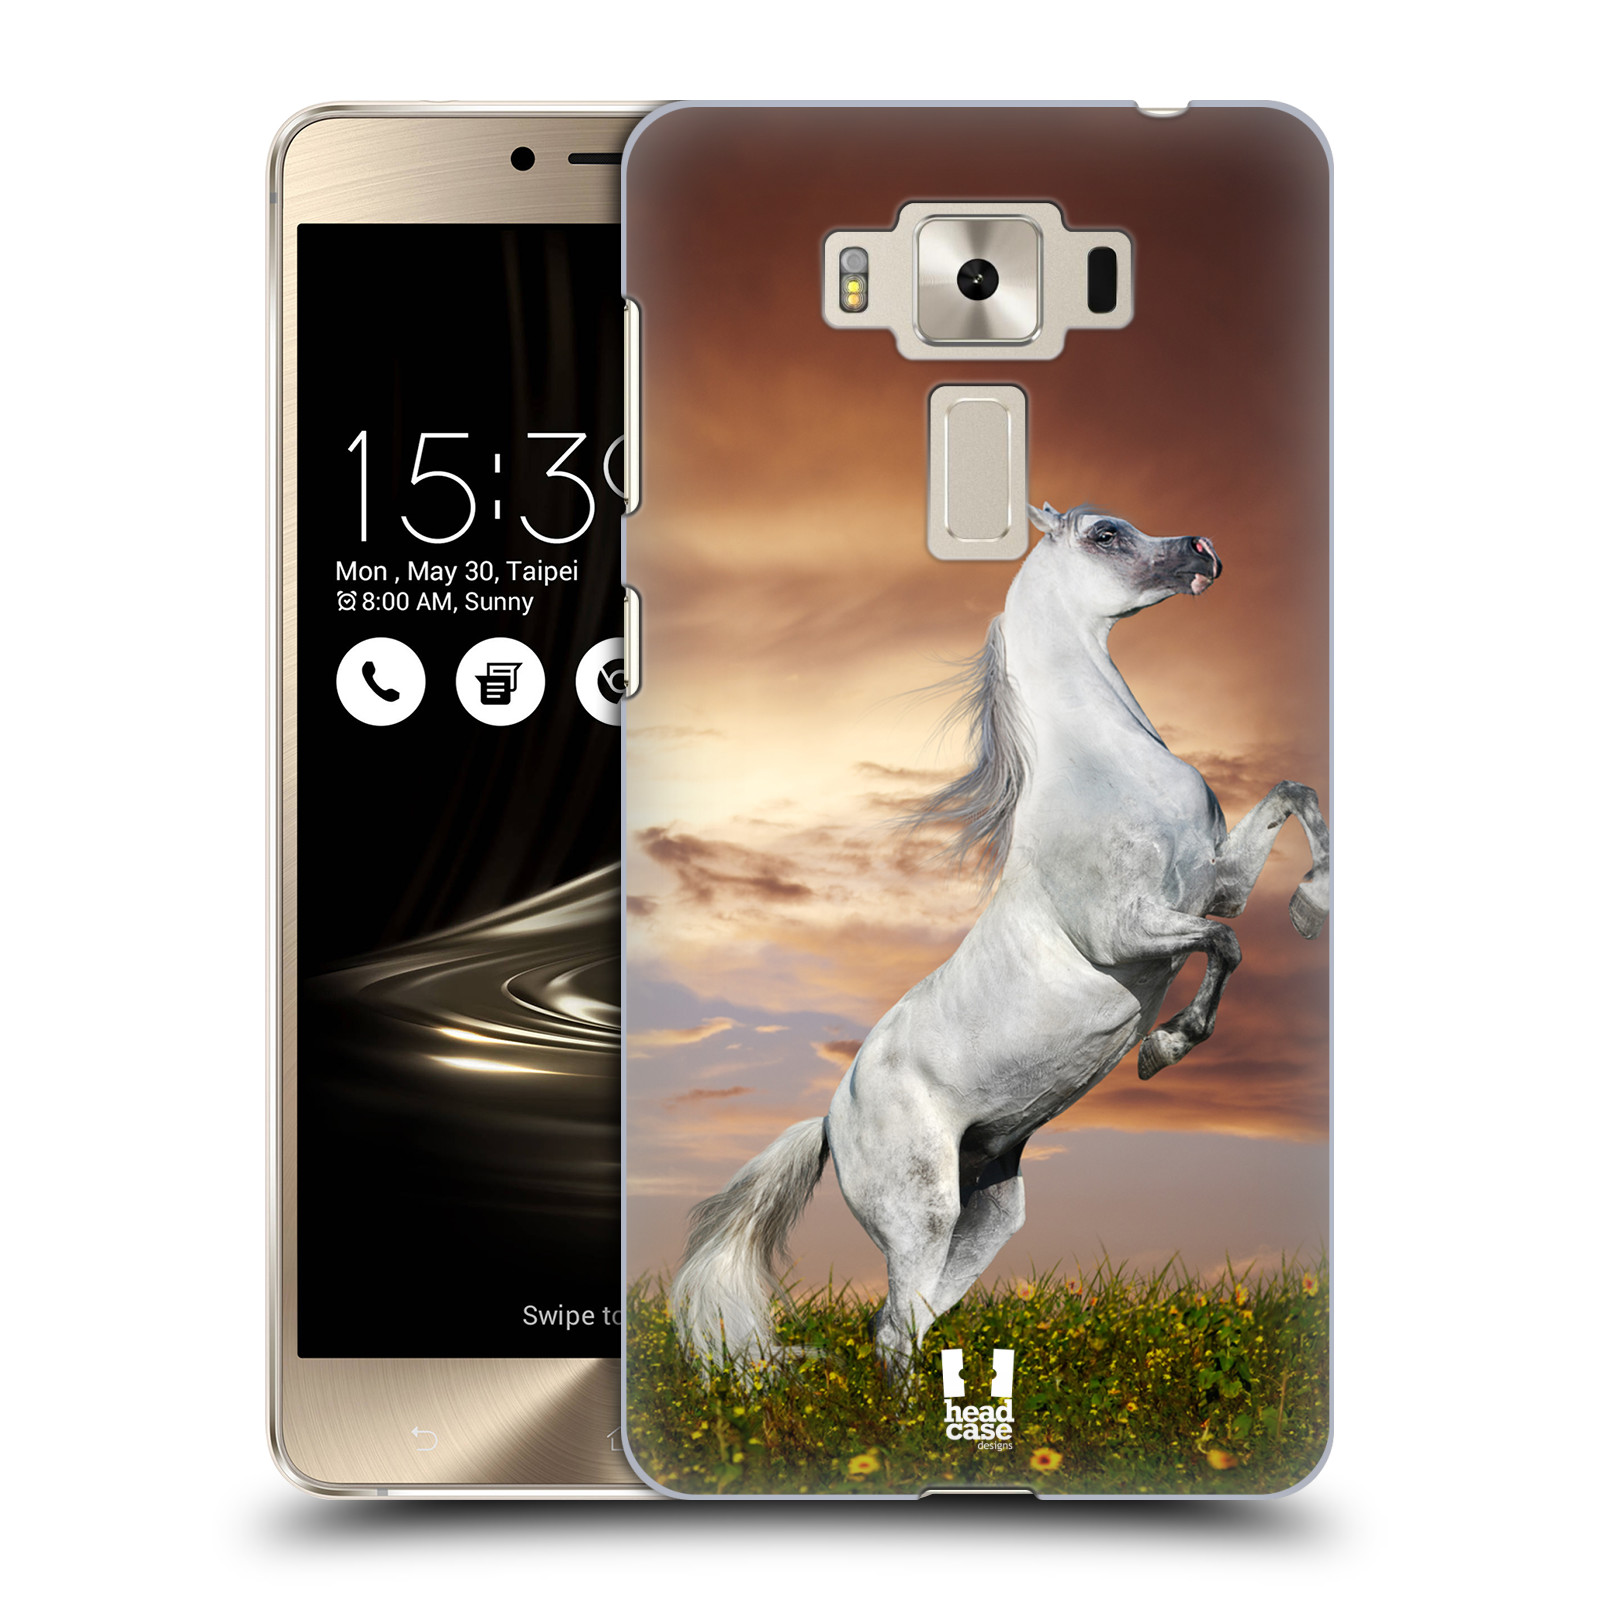 HEAD CASE plastový obal na mobil Asus Zenfone 3 DELUXE ZS550KL vzor Divočina, Divoký život a zvířata foto DIVOKÝ KŮŇ MUSTANG BÍLÁ